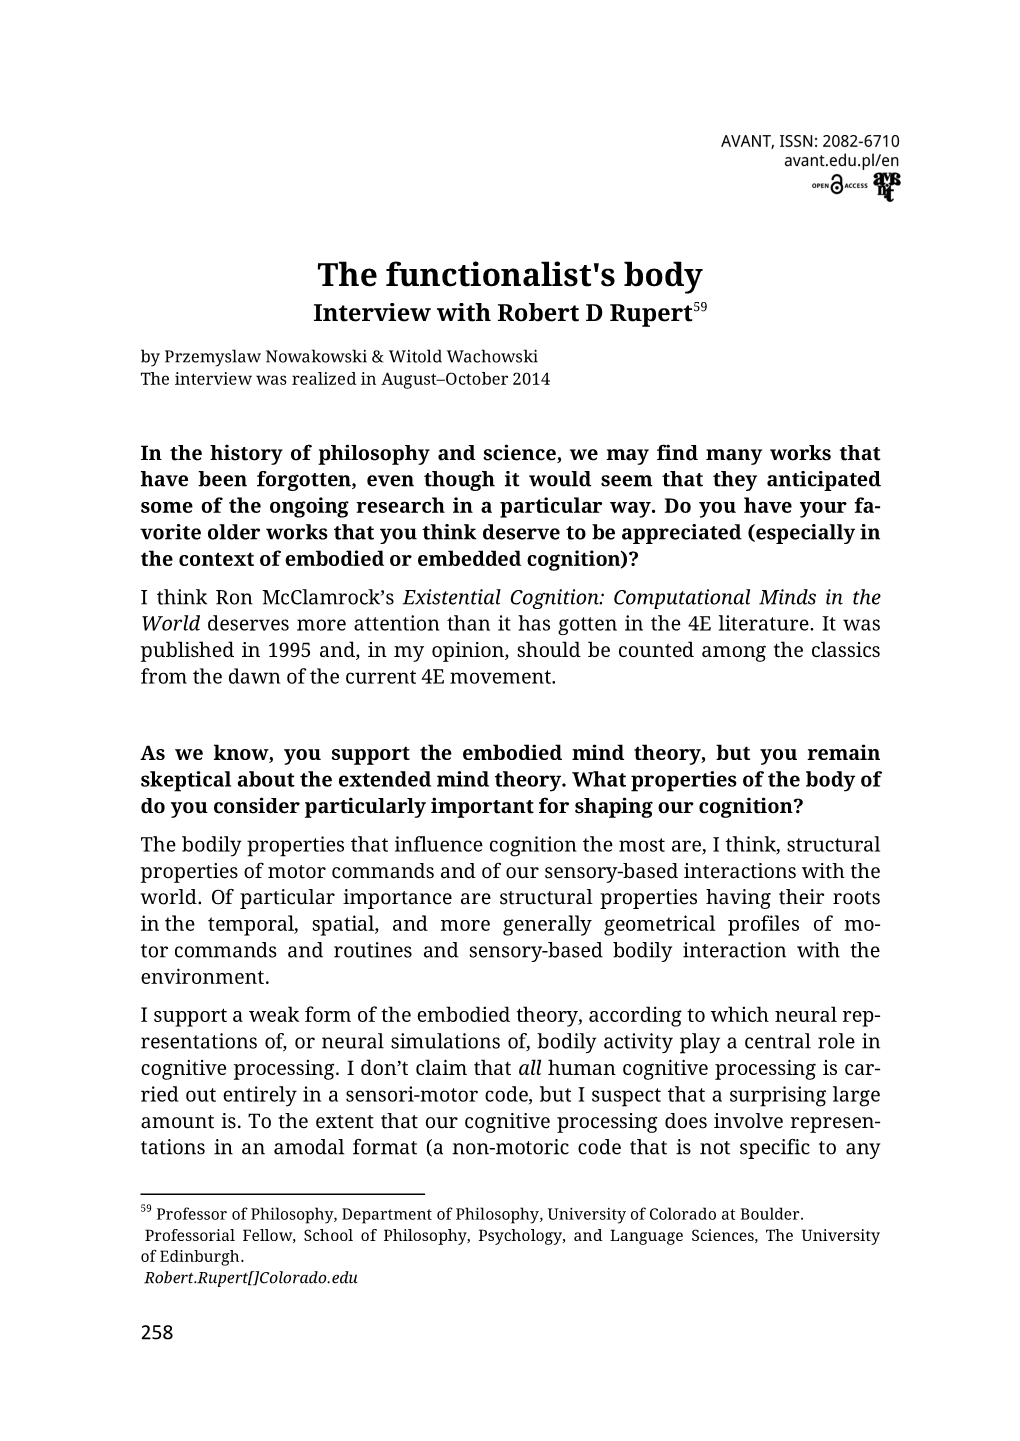 The Functionalist's Body. Interview with Robert D Rupert